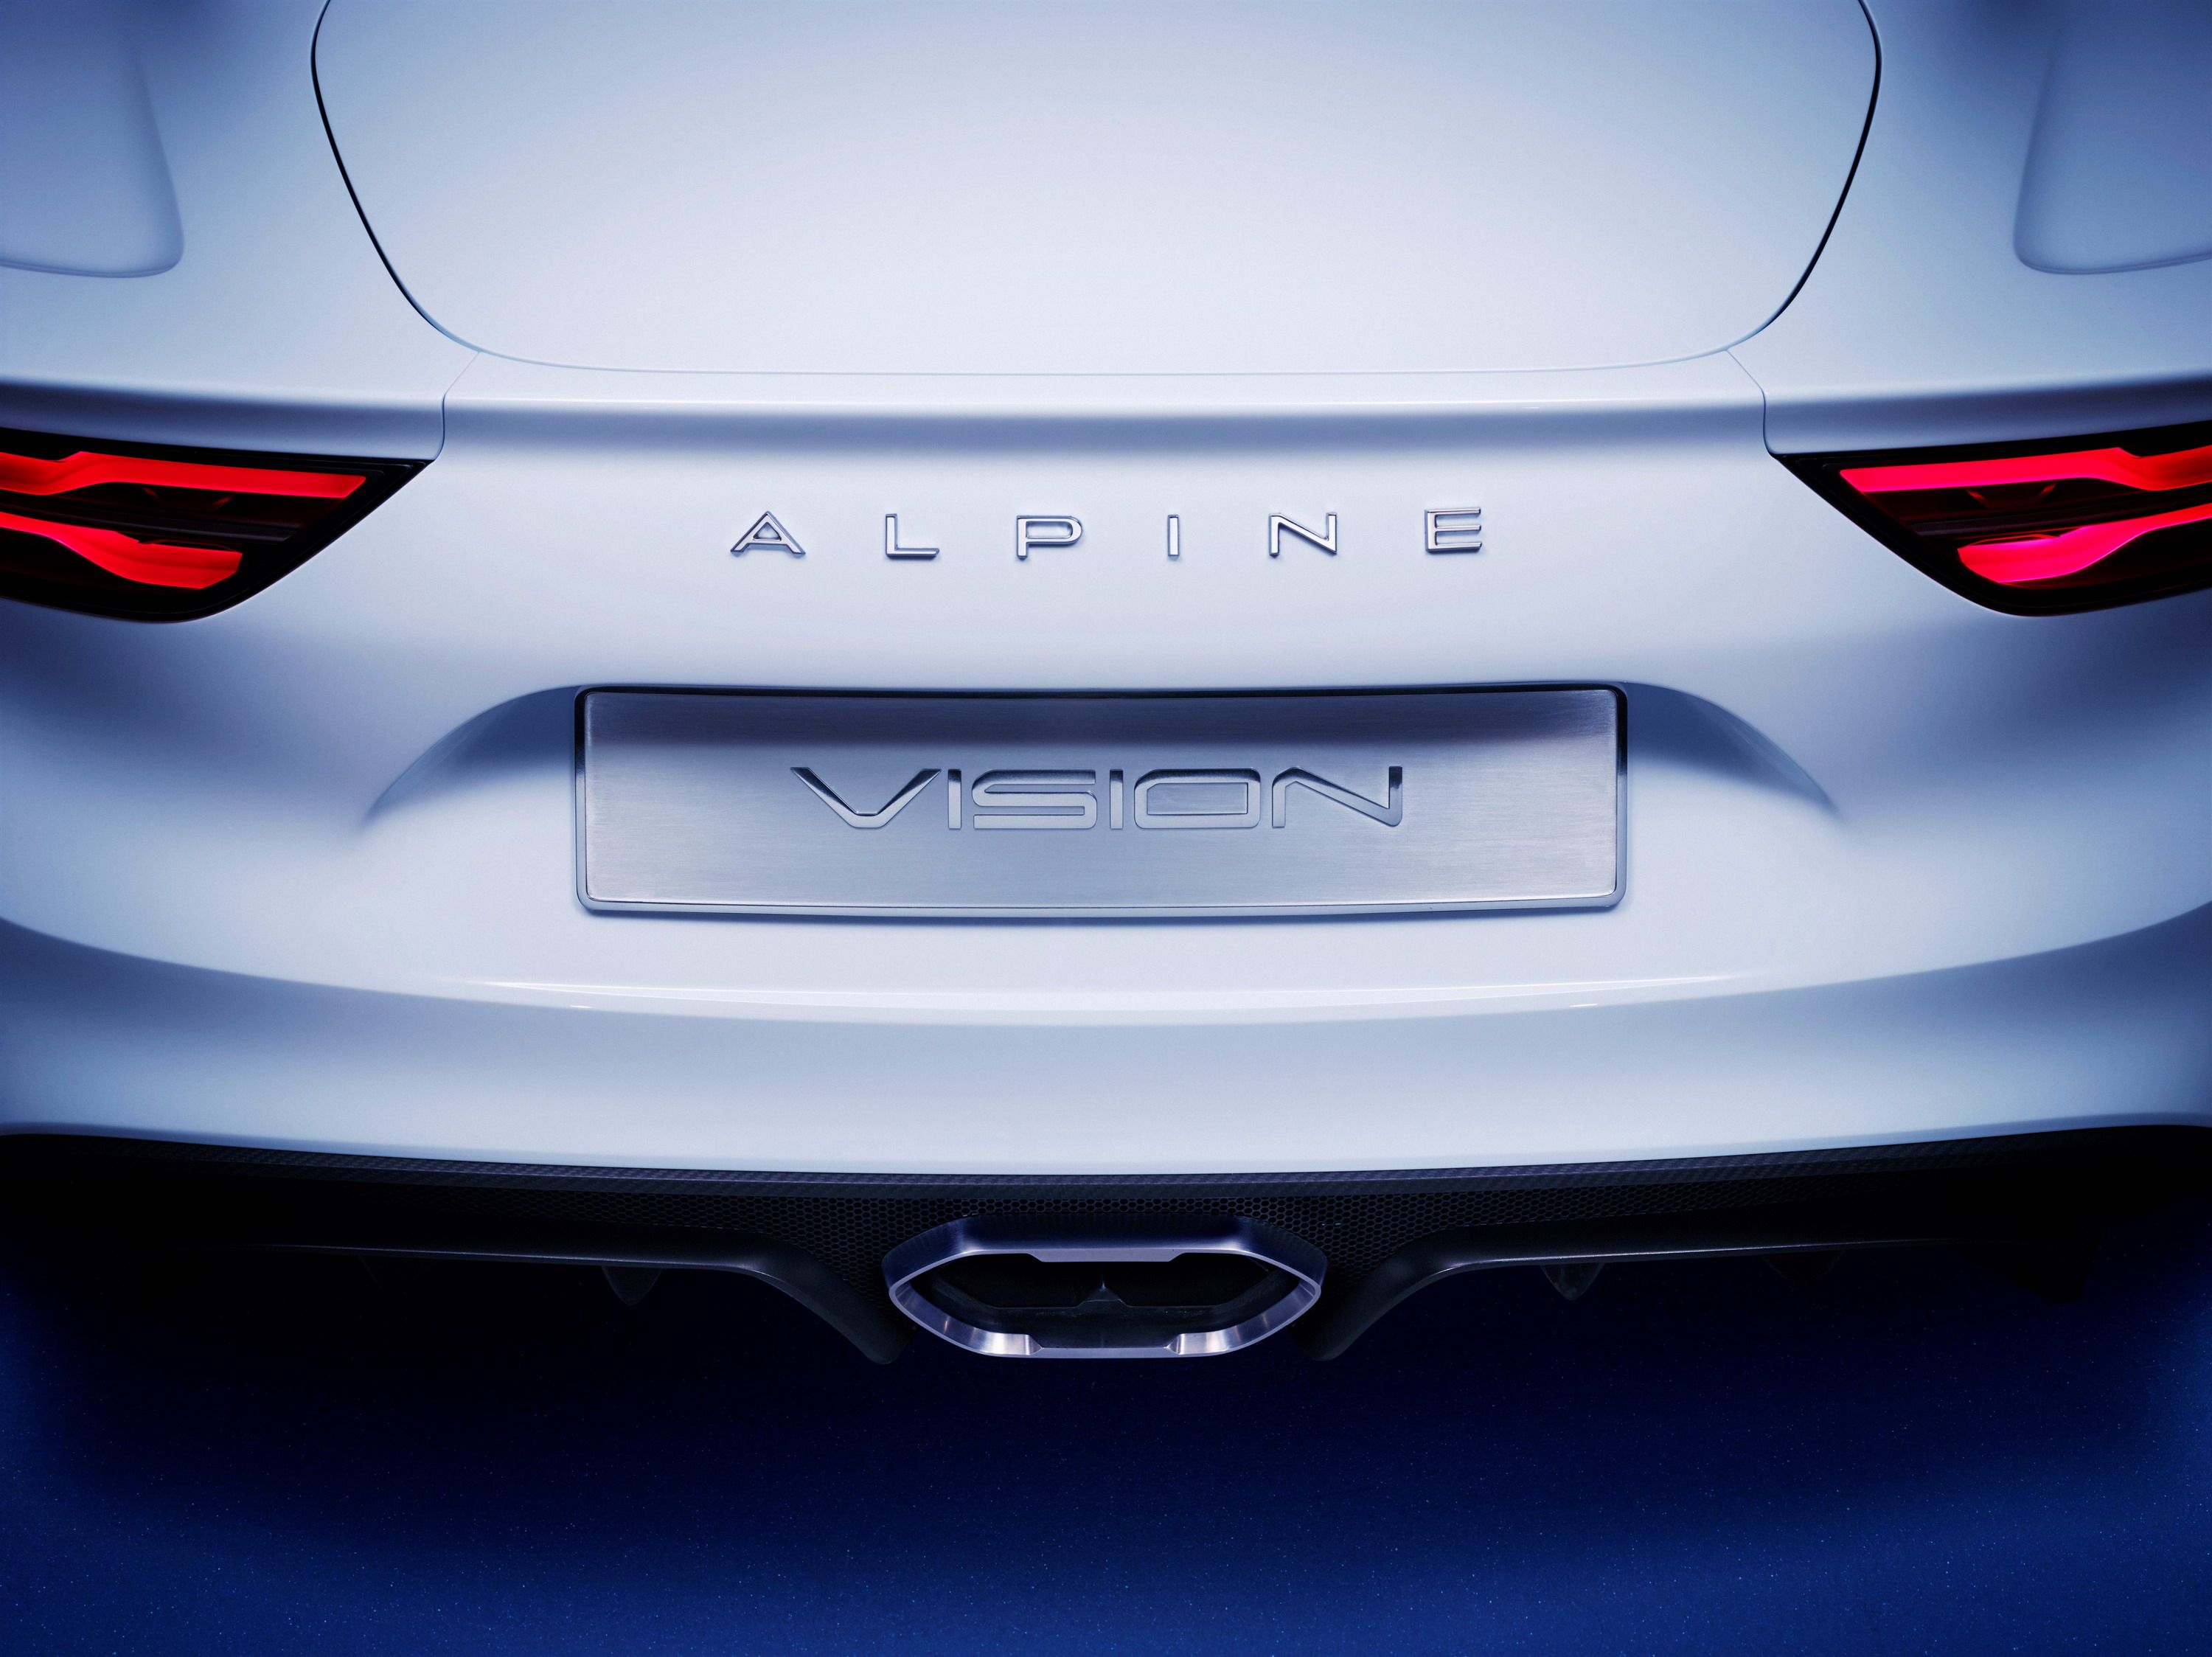 2016 Renault Alpine Vision Concept